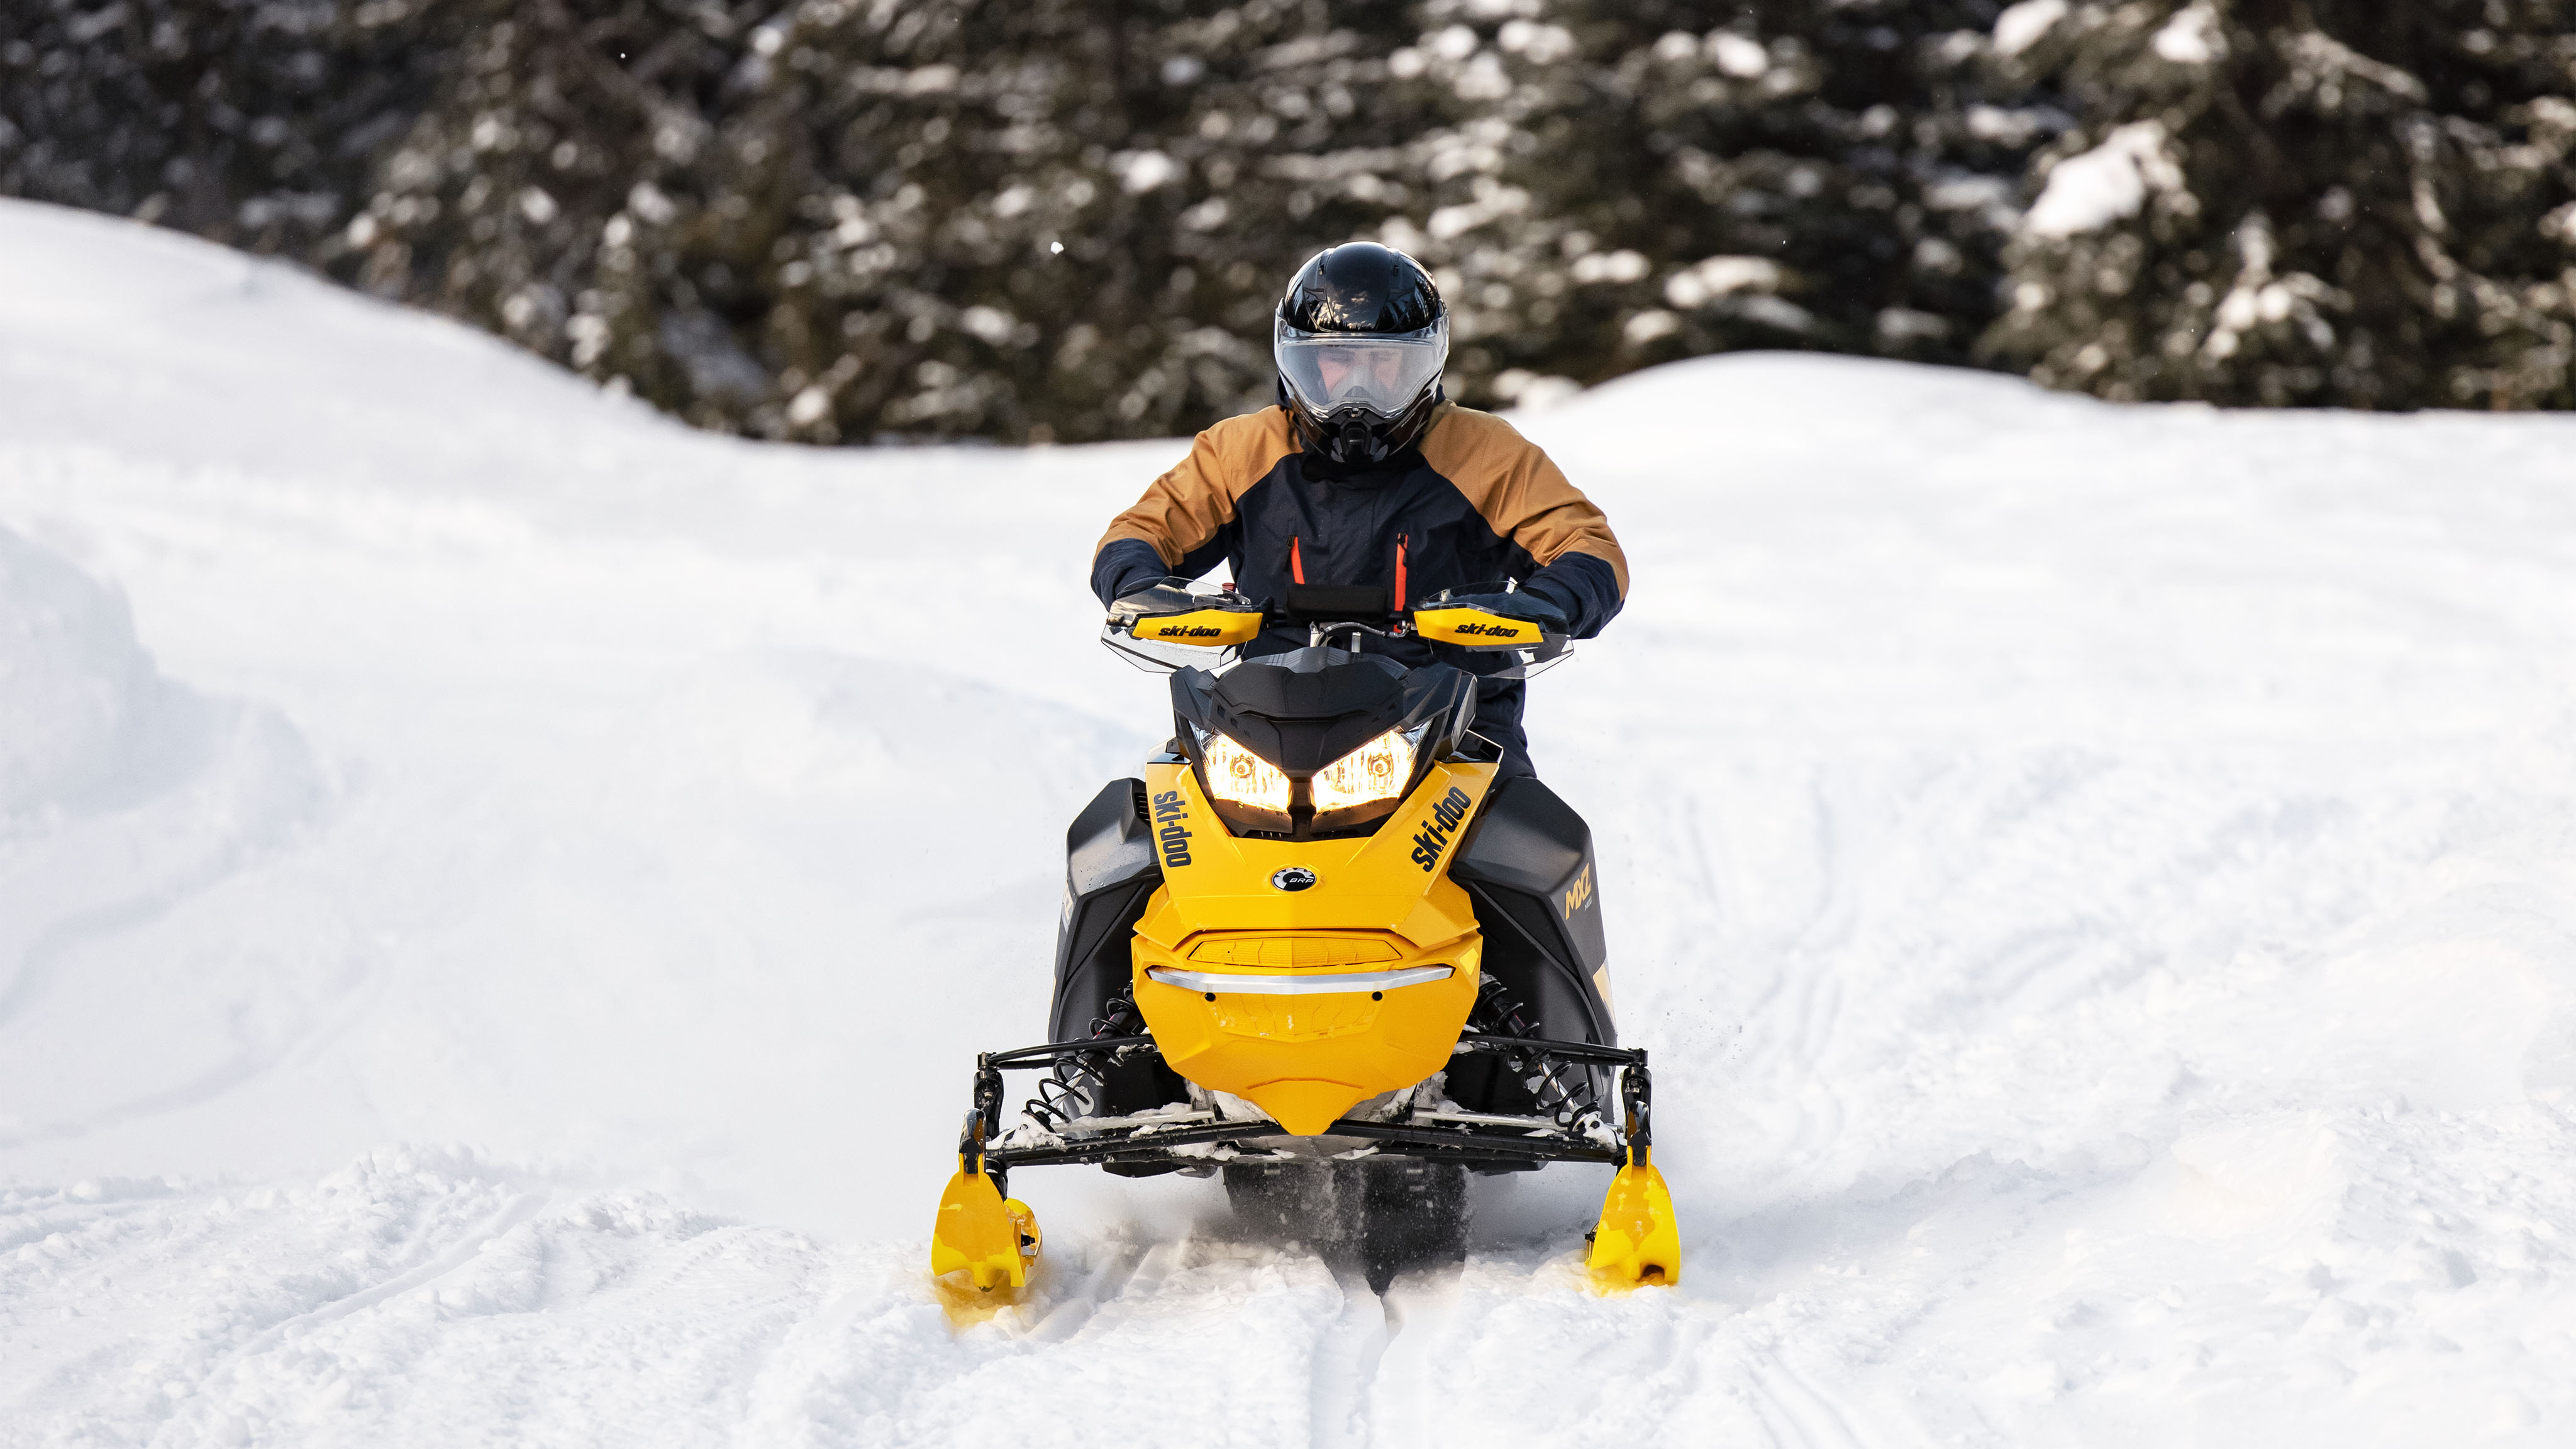 2023 SkiDoo MXZ NEO Intermediate Trail snowmobile & Sleds